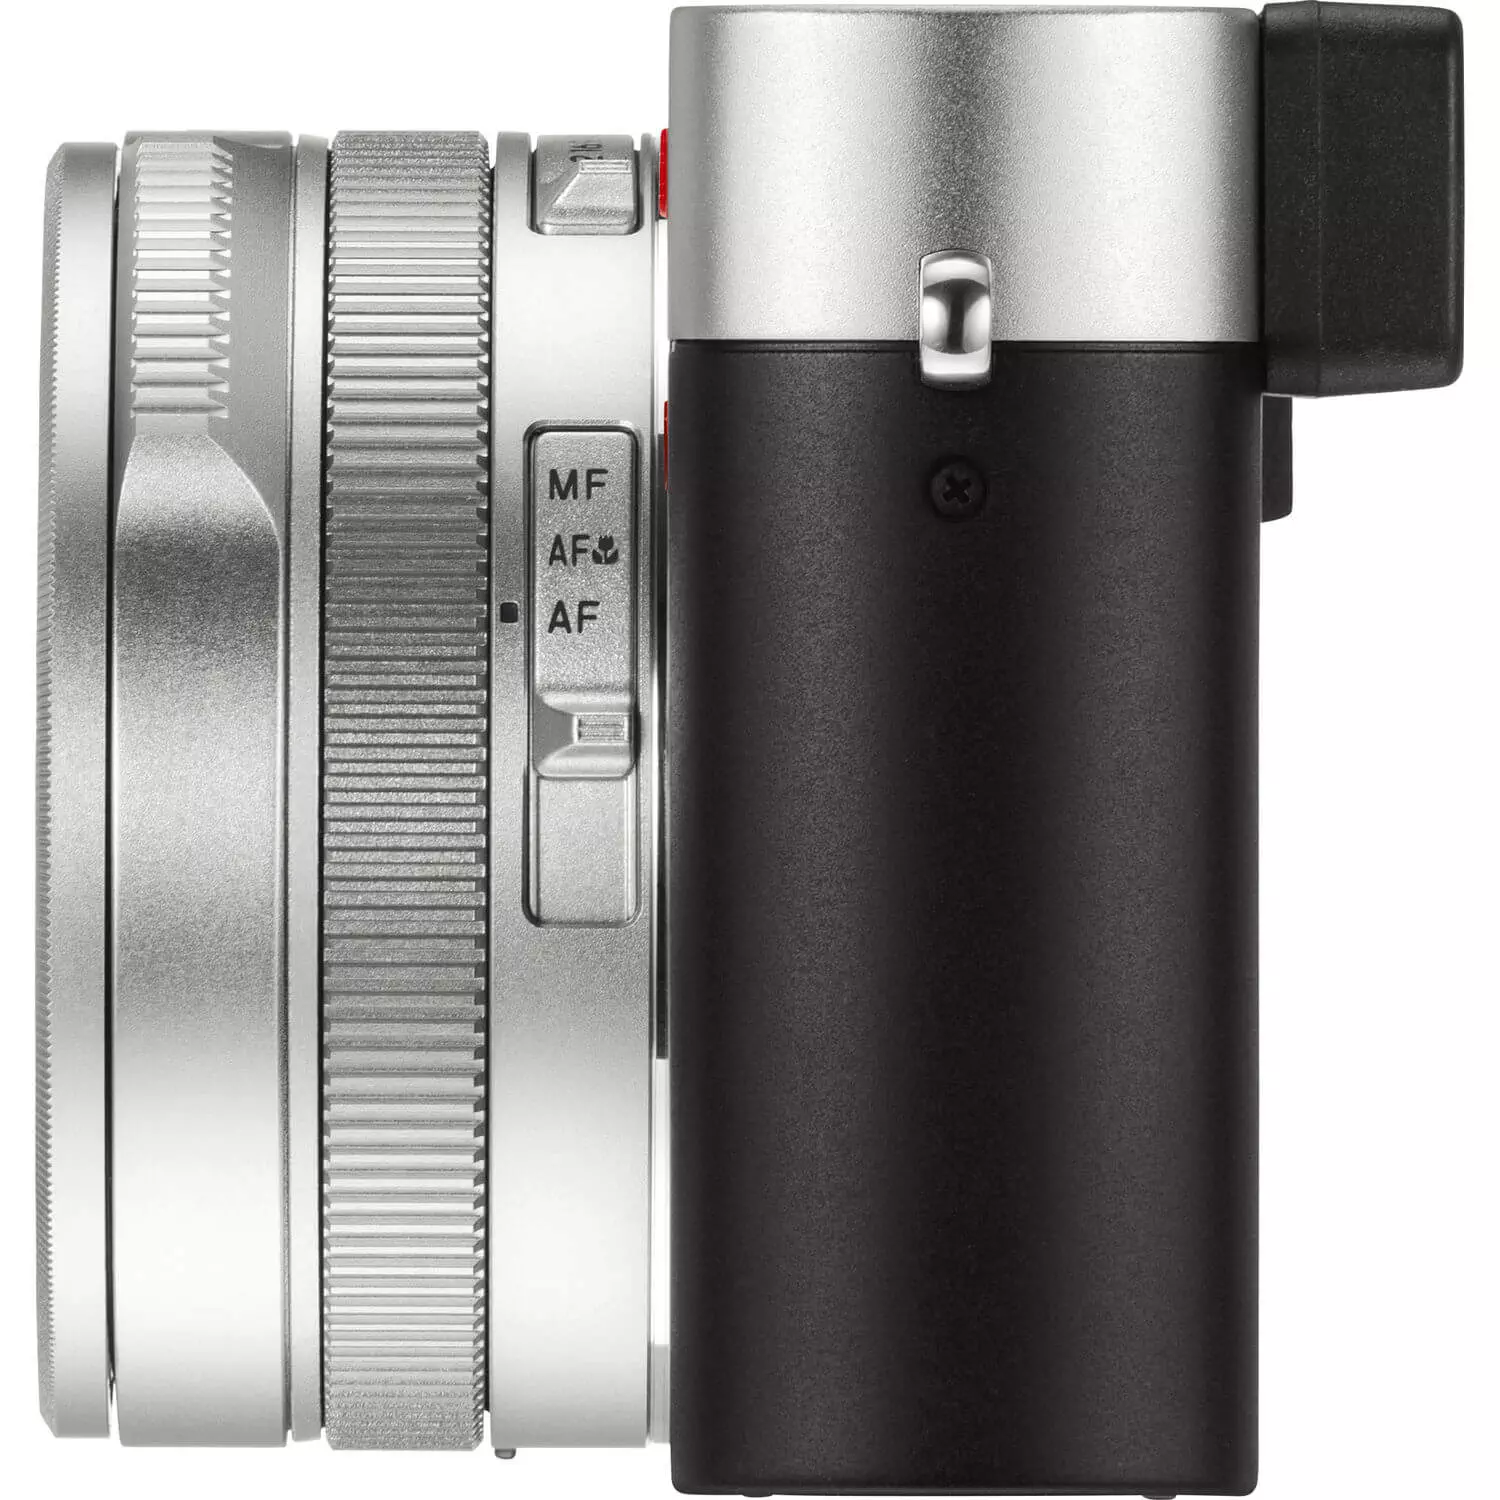 Leica D-LUX 7 Digital camera Silver anodized Version "E" (19115)